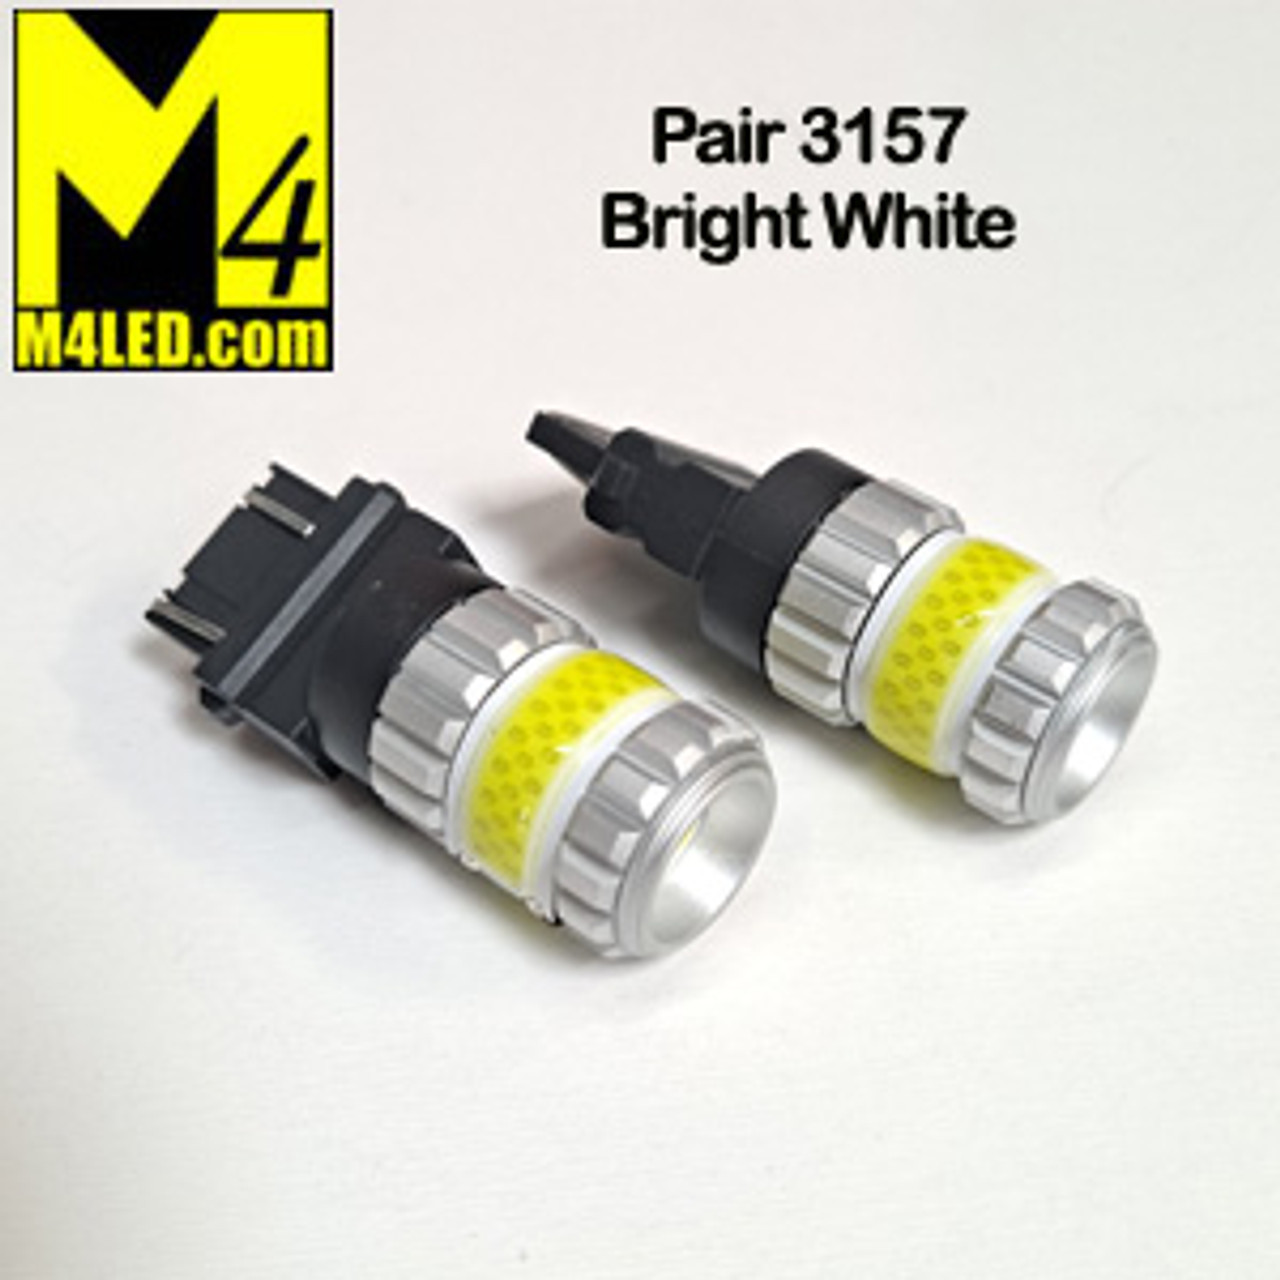 3157-G12-WHITE PAIR 3157 White Tail Light Replacement, Running, Turn (Hi/Low)